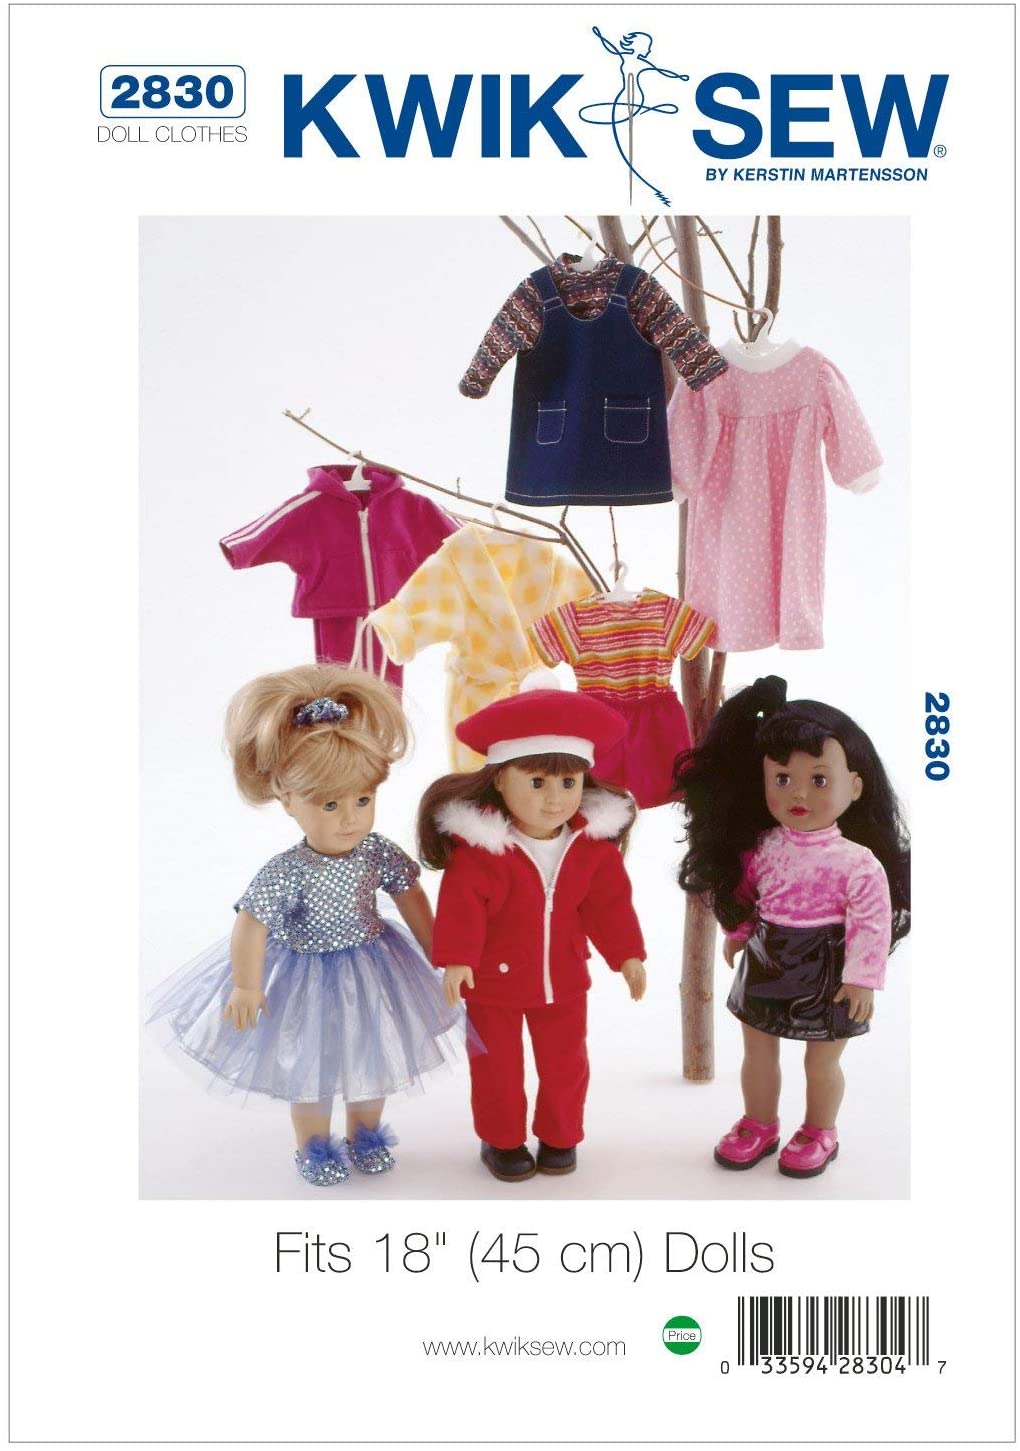 KwikSew® Papierschnittmuster Puppenkleidung für 45cm (18") Puppen, K2830